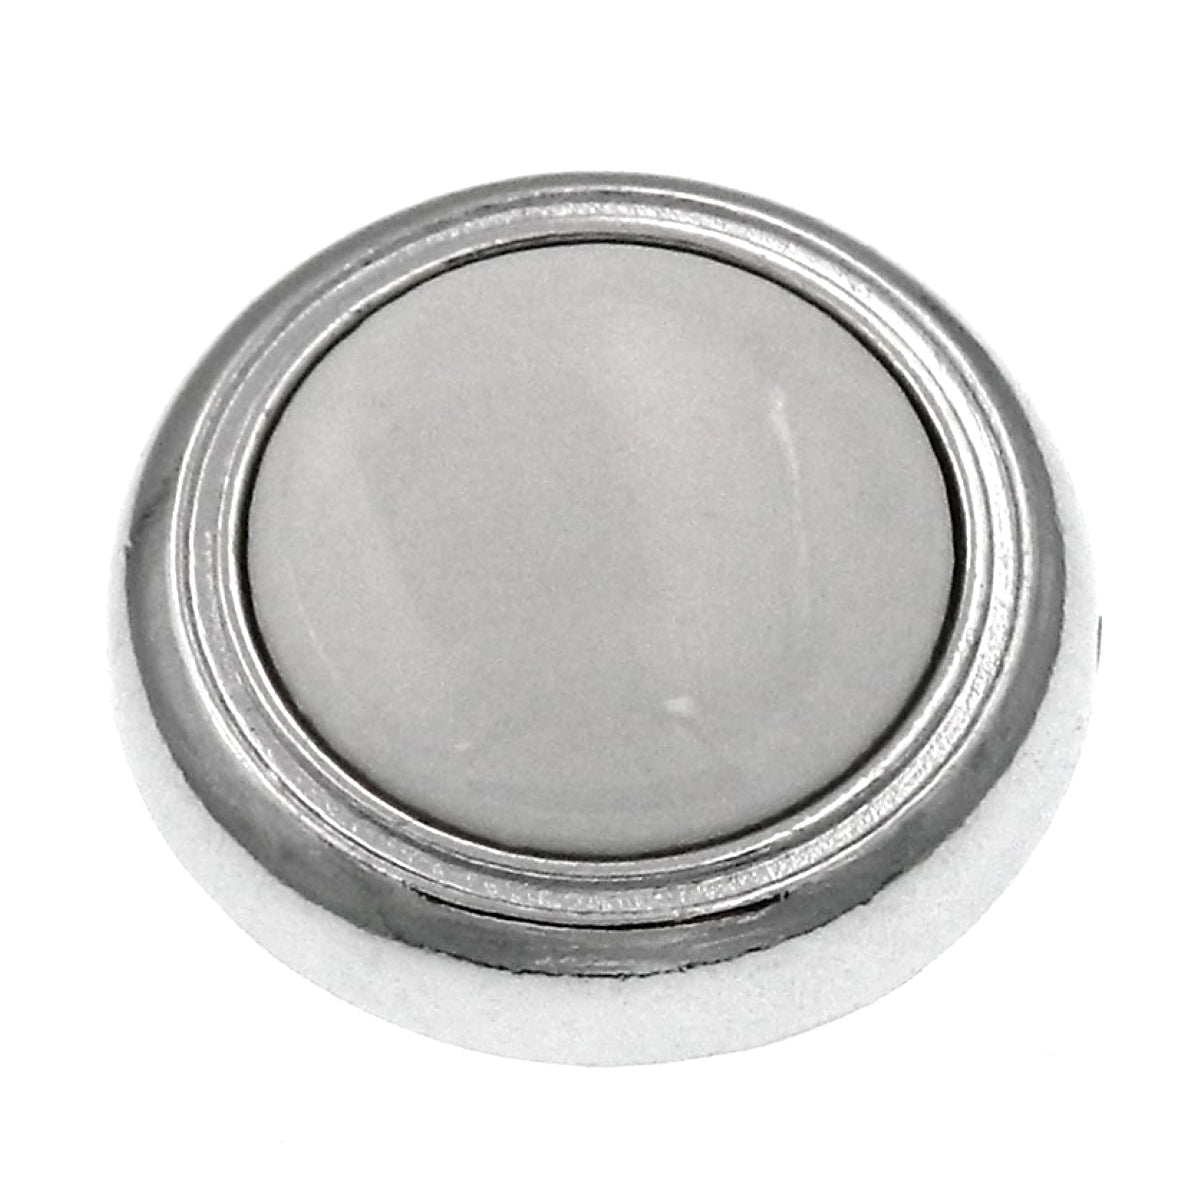 Hickory Hardware Eclipse Chrome & White Porcelain Round 1 1/4" Porcelain Cabinet Knob P710-CH